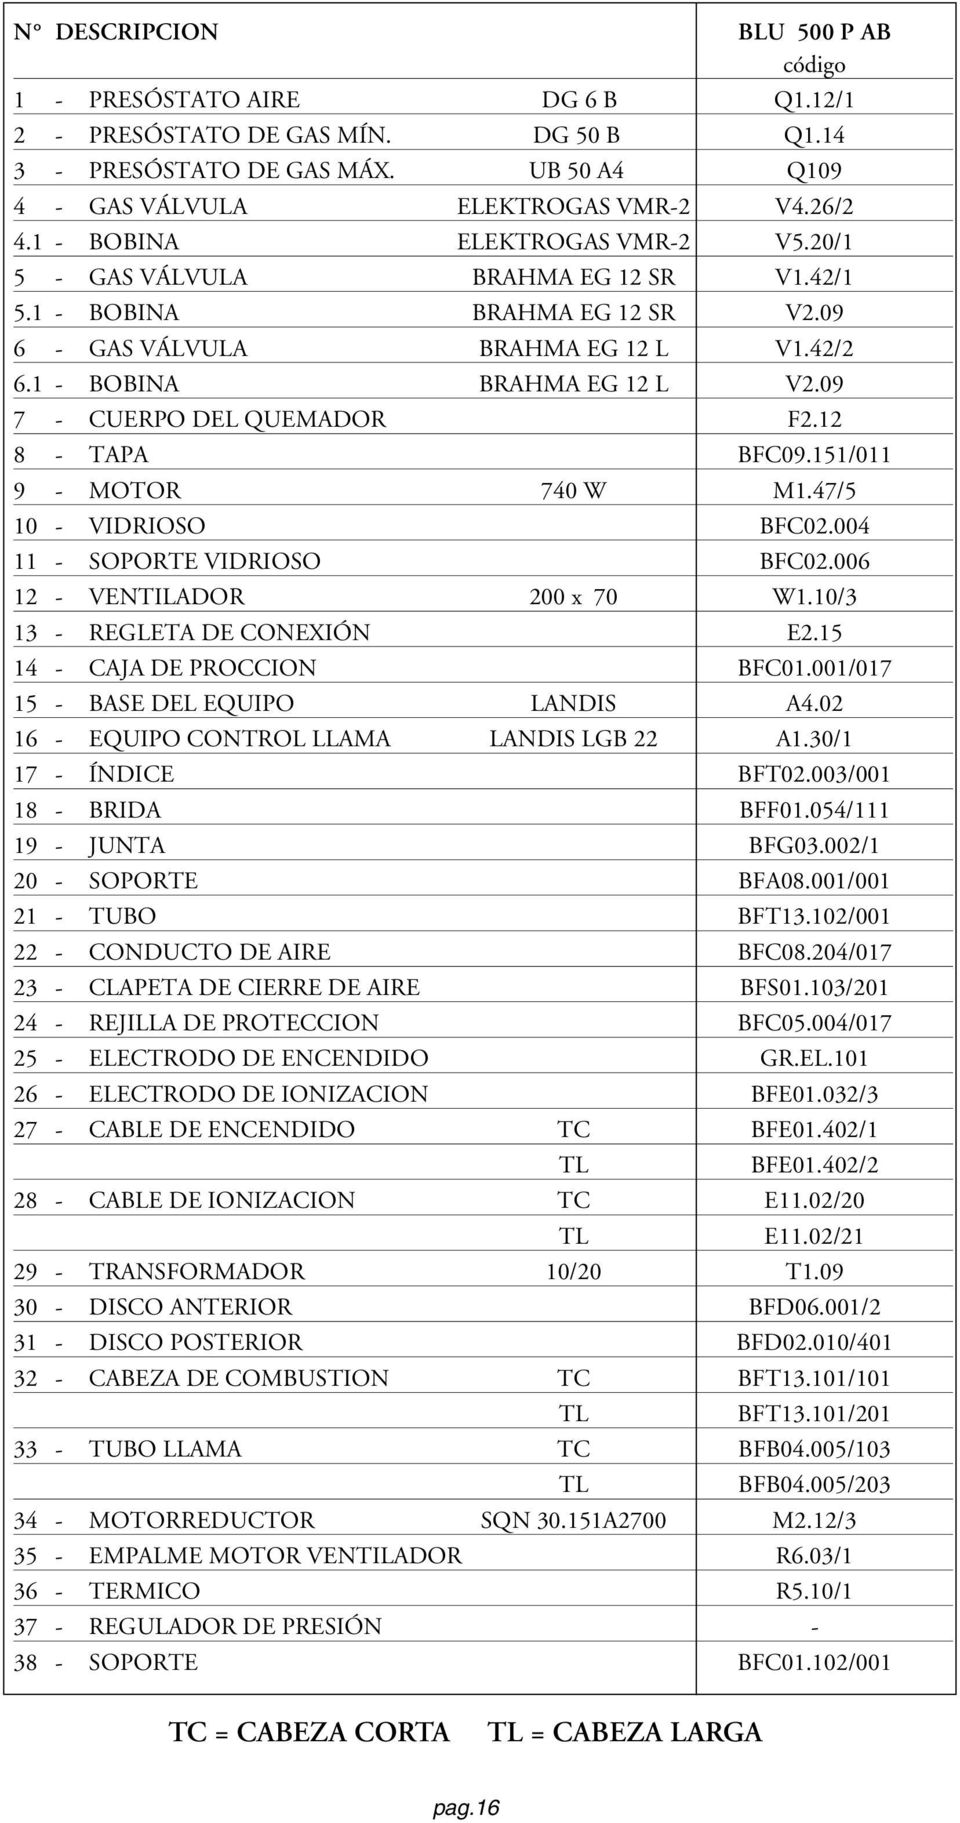 09 7 - CUERPO DEL QUEMADOR F2.12 8 - TAPA BFC09.151/011 9 - MOTOR 740 W M1.47/5 10 - VIDRIOSO BFC02.004 11 - SOPORTE VIDRIOSO BFC02.006 12 - VENTILADOR 200 x 70 W1.10/3 13 - REGLETA DE CONEXIÓN E2.